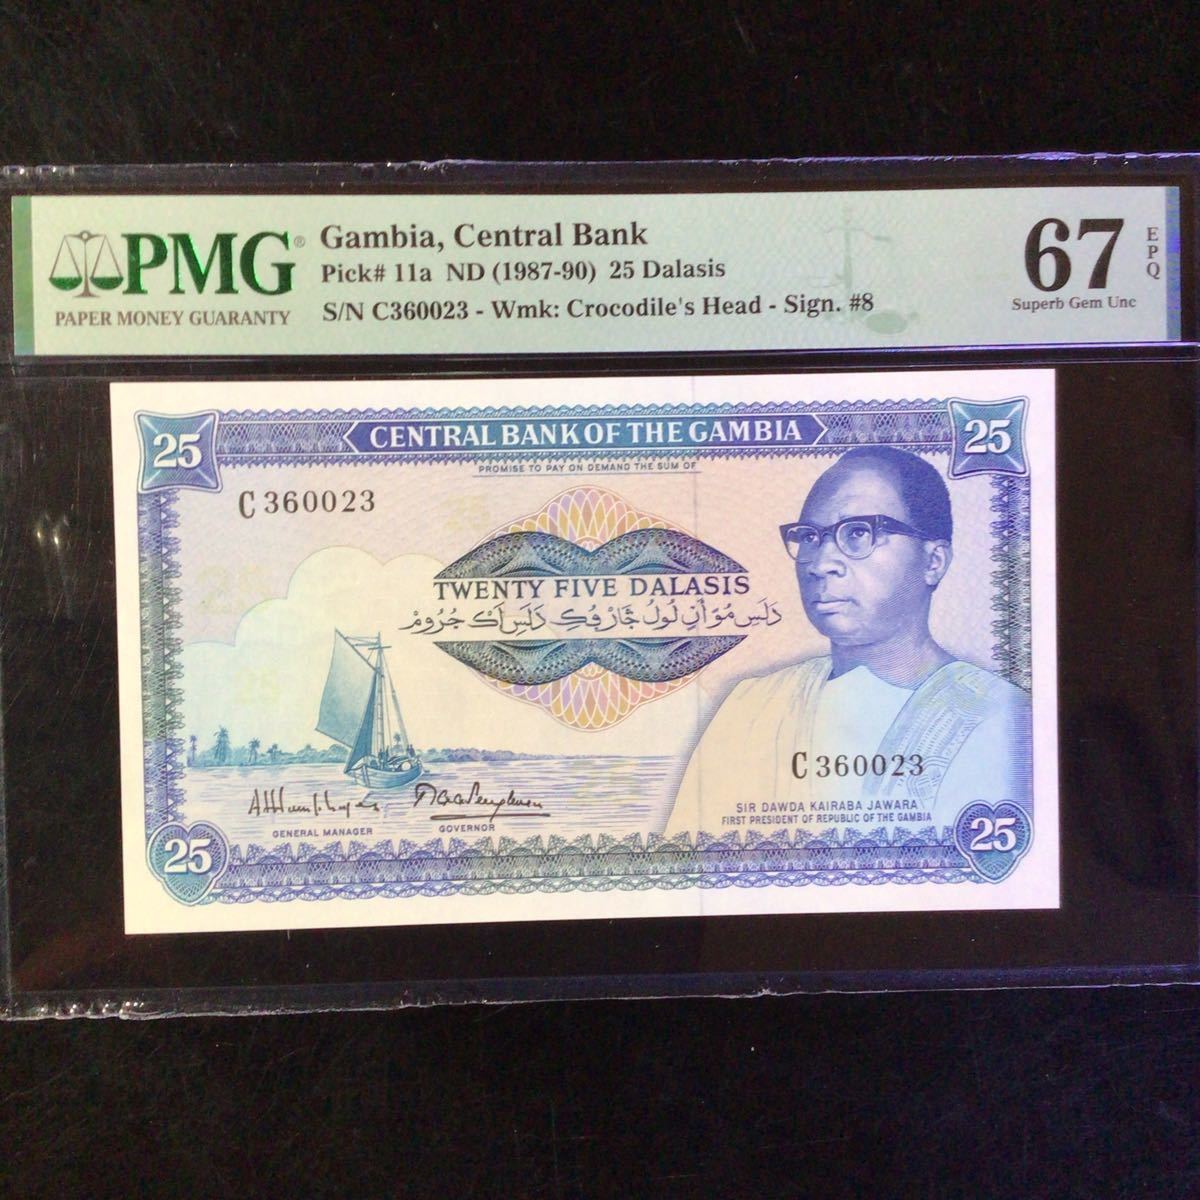 World Banknote Grading GAMBIA《Central Bank》 25 Dalasis【1987-90】『PMG Grading Superb Gem Uncirculated 67 EPQ』